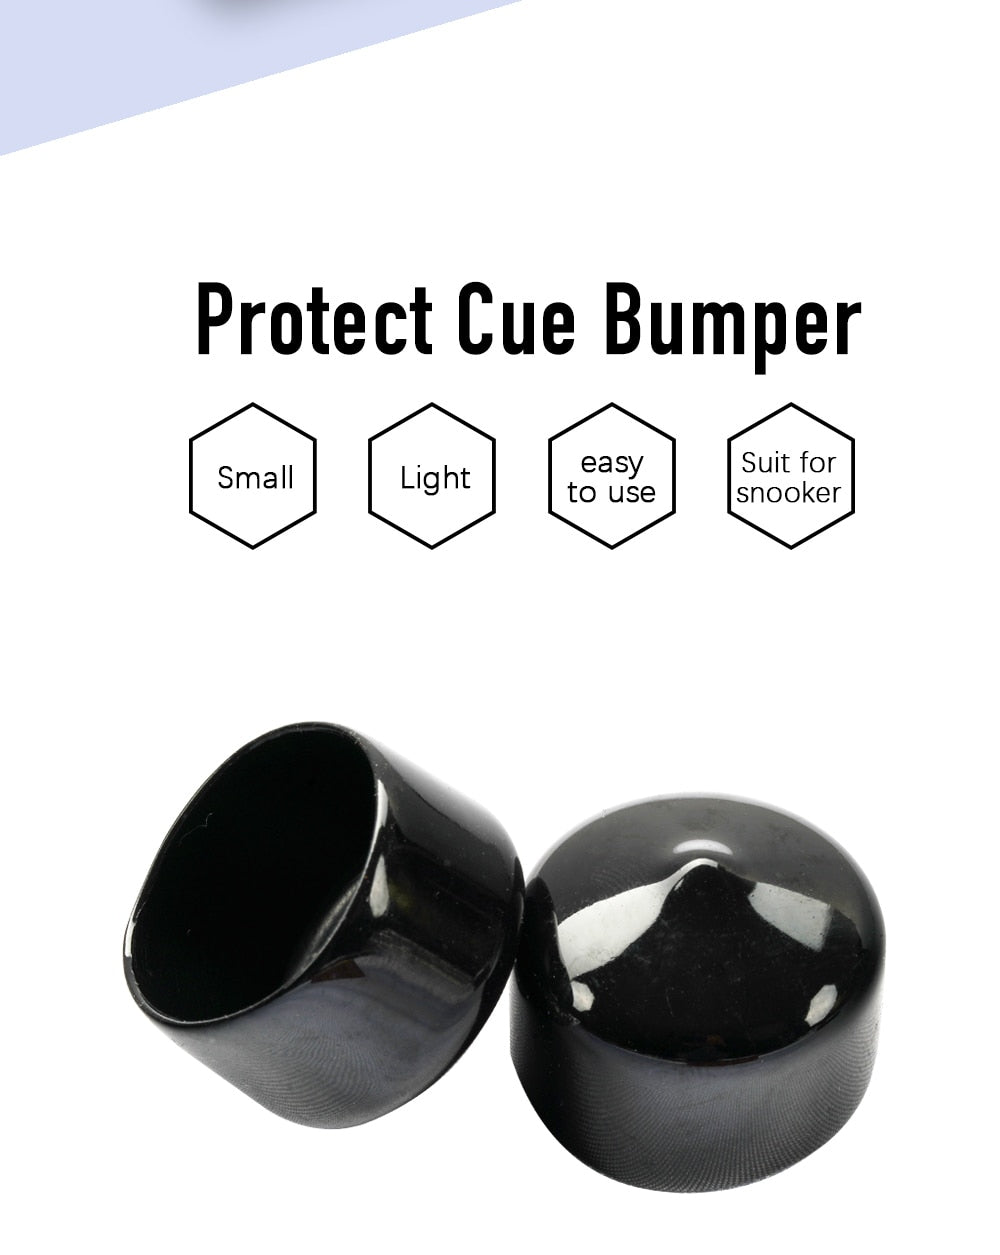 Billiard Pool Cue Bumper 5pcs Protector Fit Snooker Cue Extension Rubber Bumper Professional Butt Connected Cue Accessories